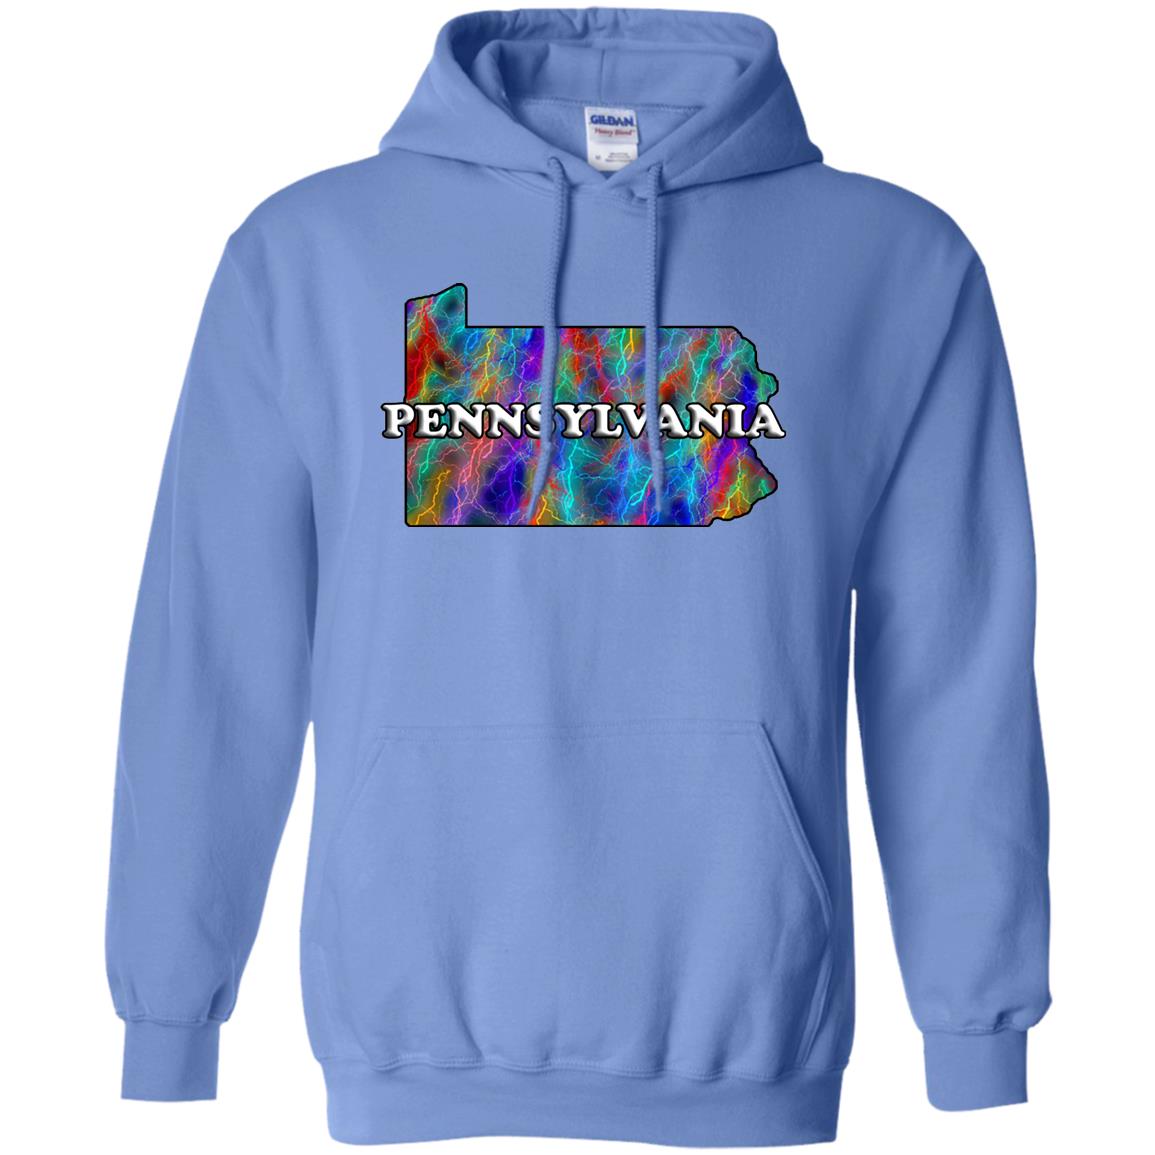 Pennsylvania State Hoodie